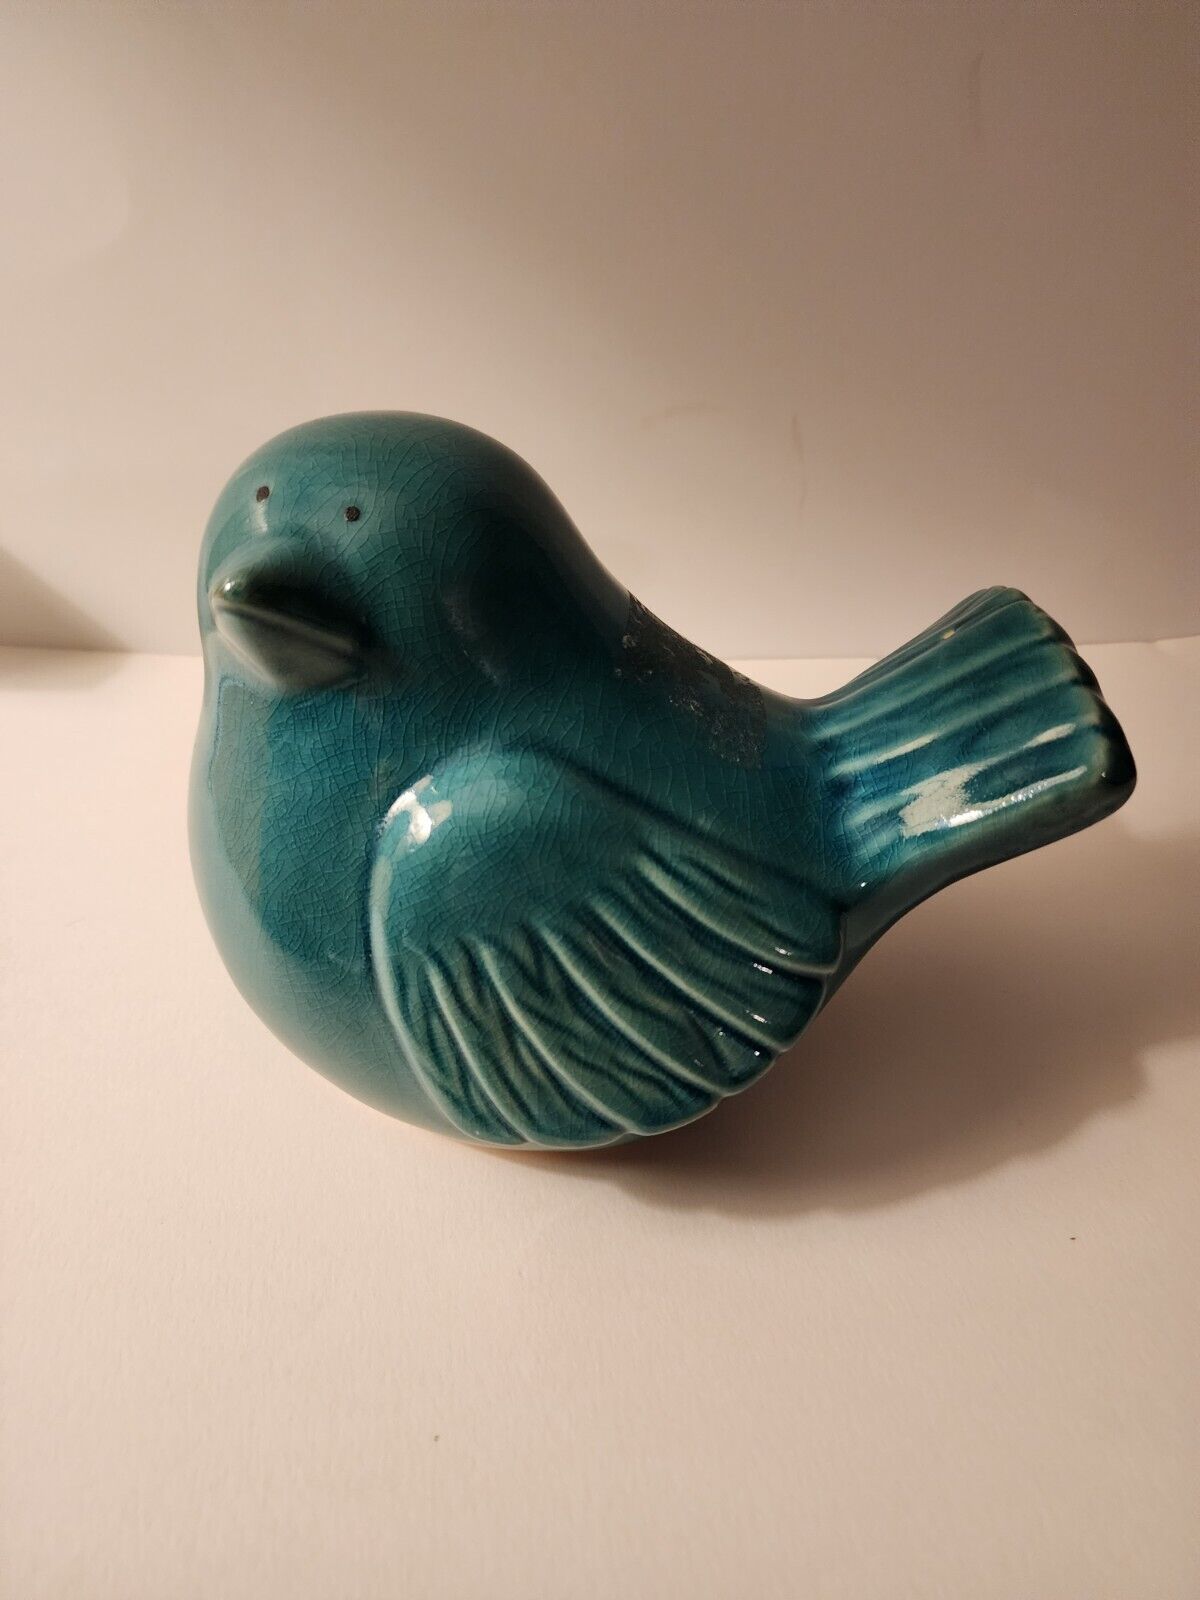 Antique Teal Bird, Porcelain